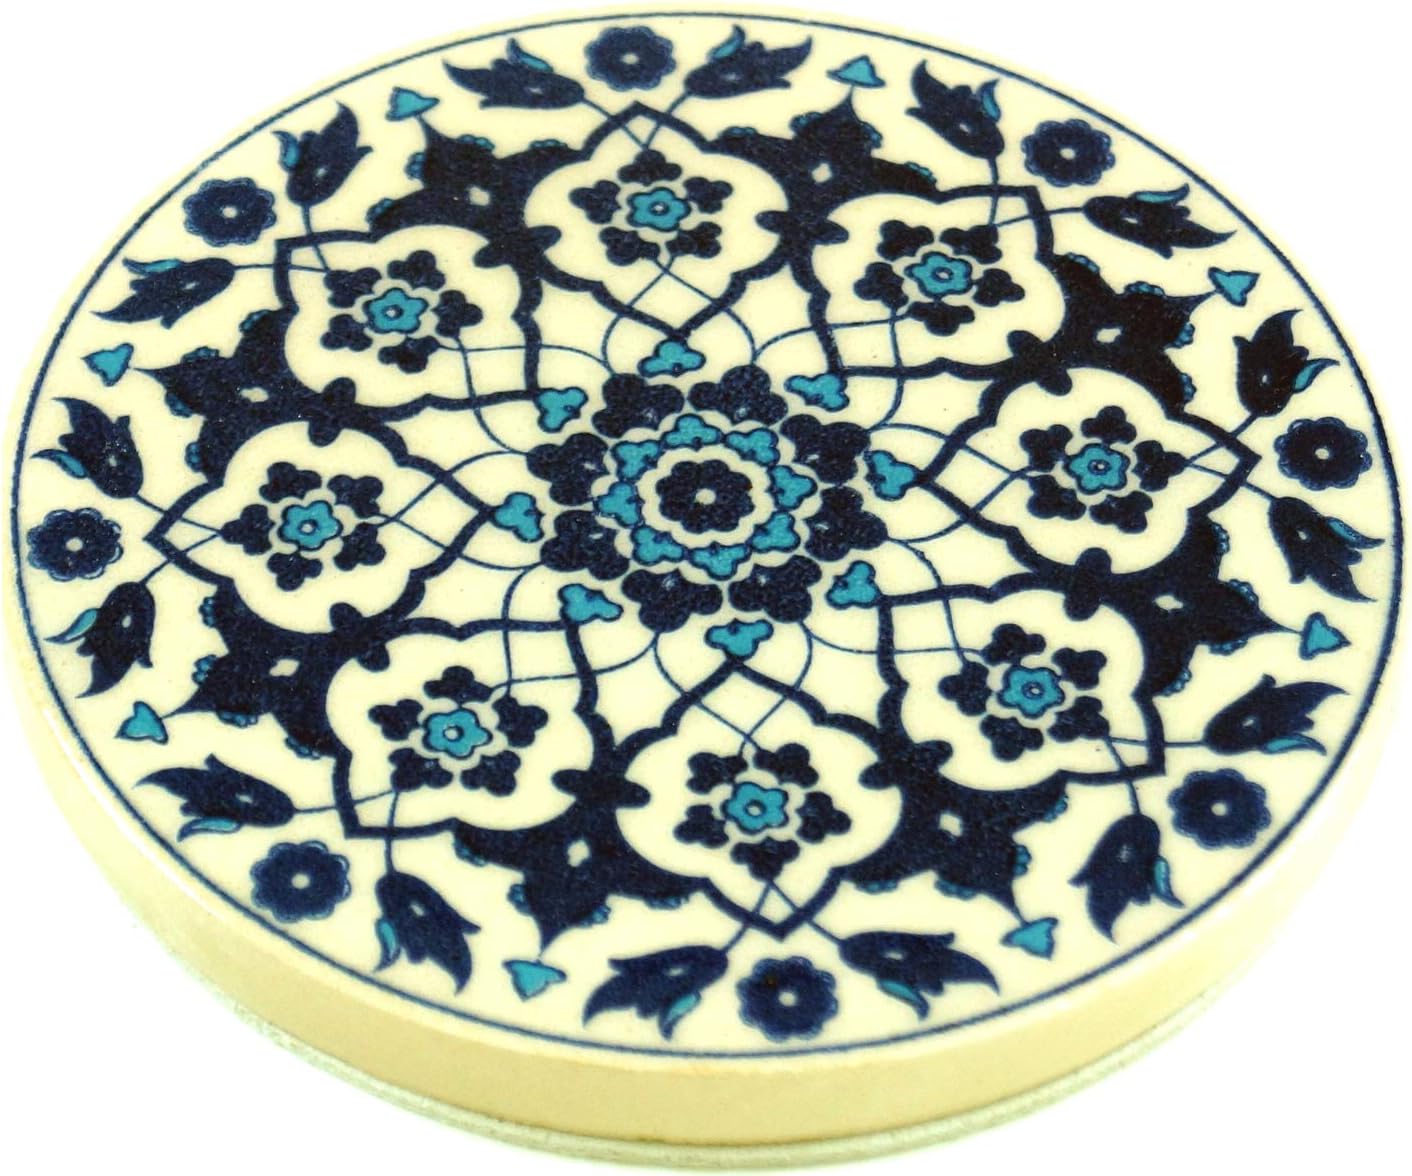 GURU SHOP Oriental Ceramic Coasters, Round Coasters for Glasses, Cups with Mandala Motif Set - Pattern 12, White, Set of 6, Coasters, Trays